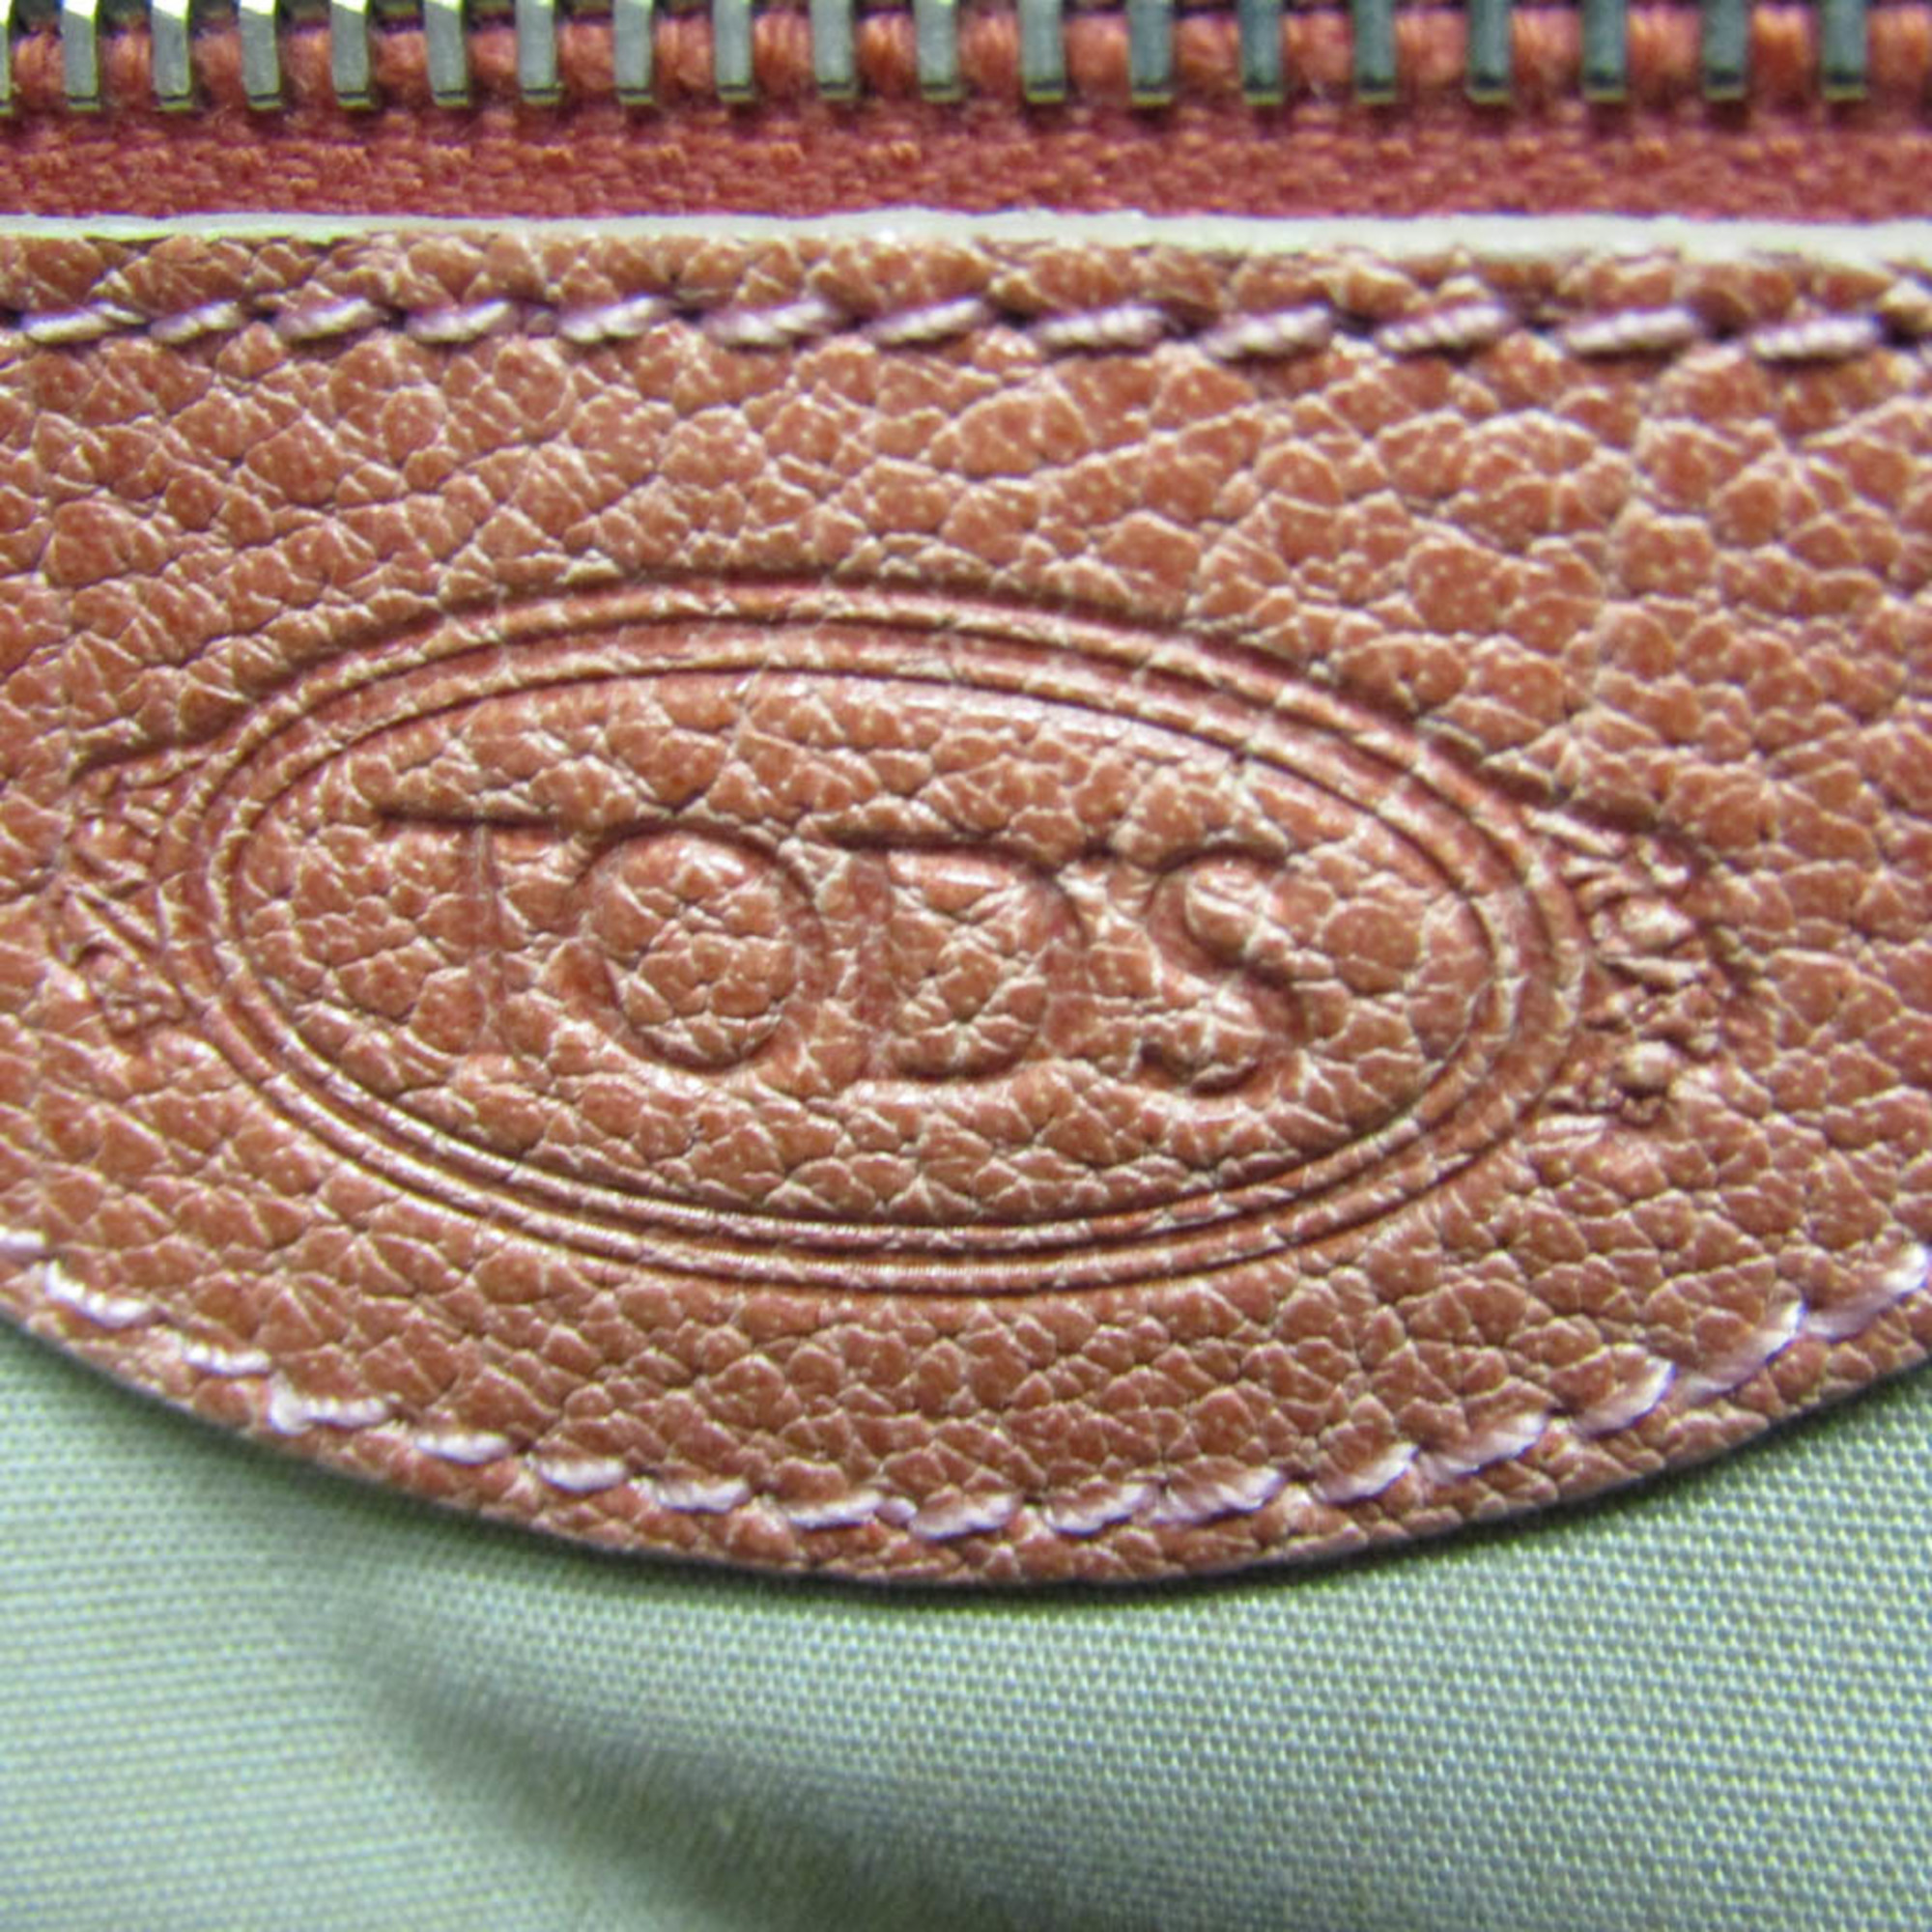 Tod's Women's Leather Handbag Salmon Pink